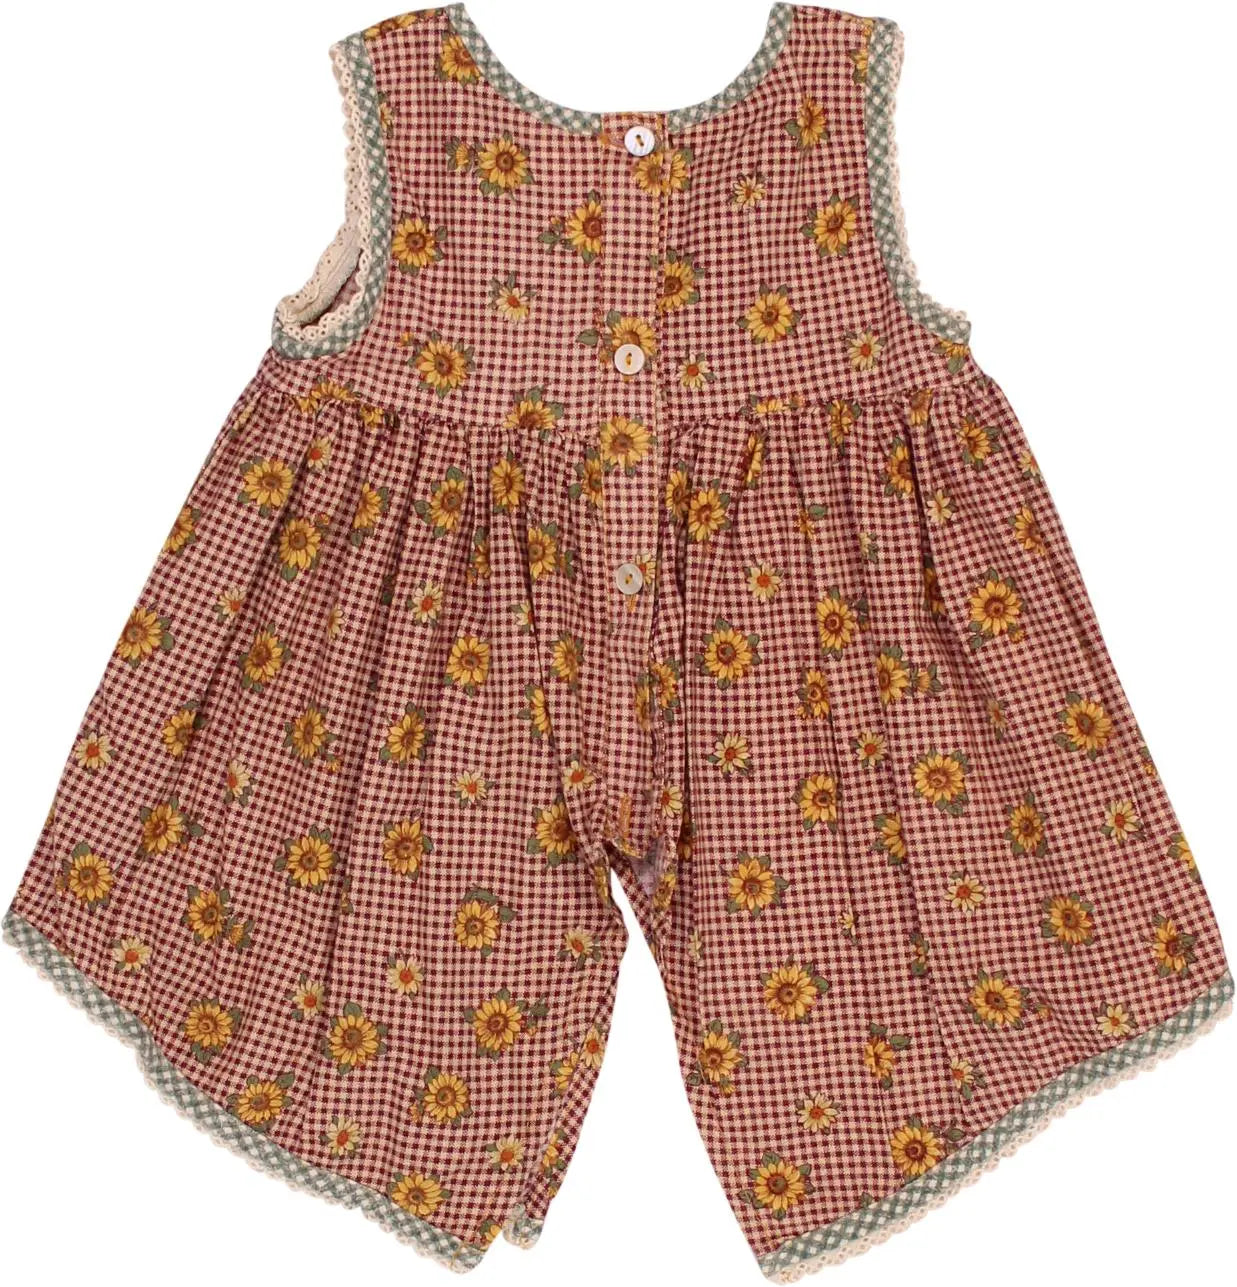 Portofino - Checkered Dress- ThriftTale.com - Vintage and second handclothing